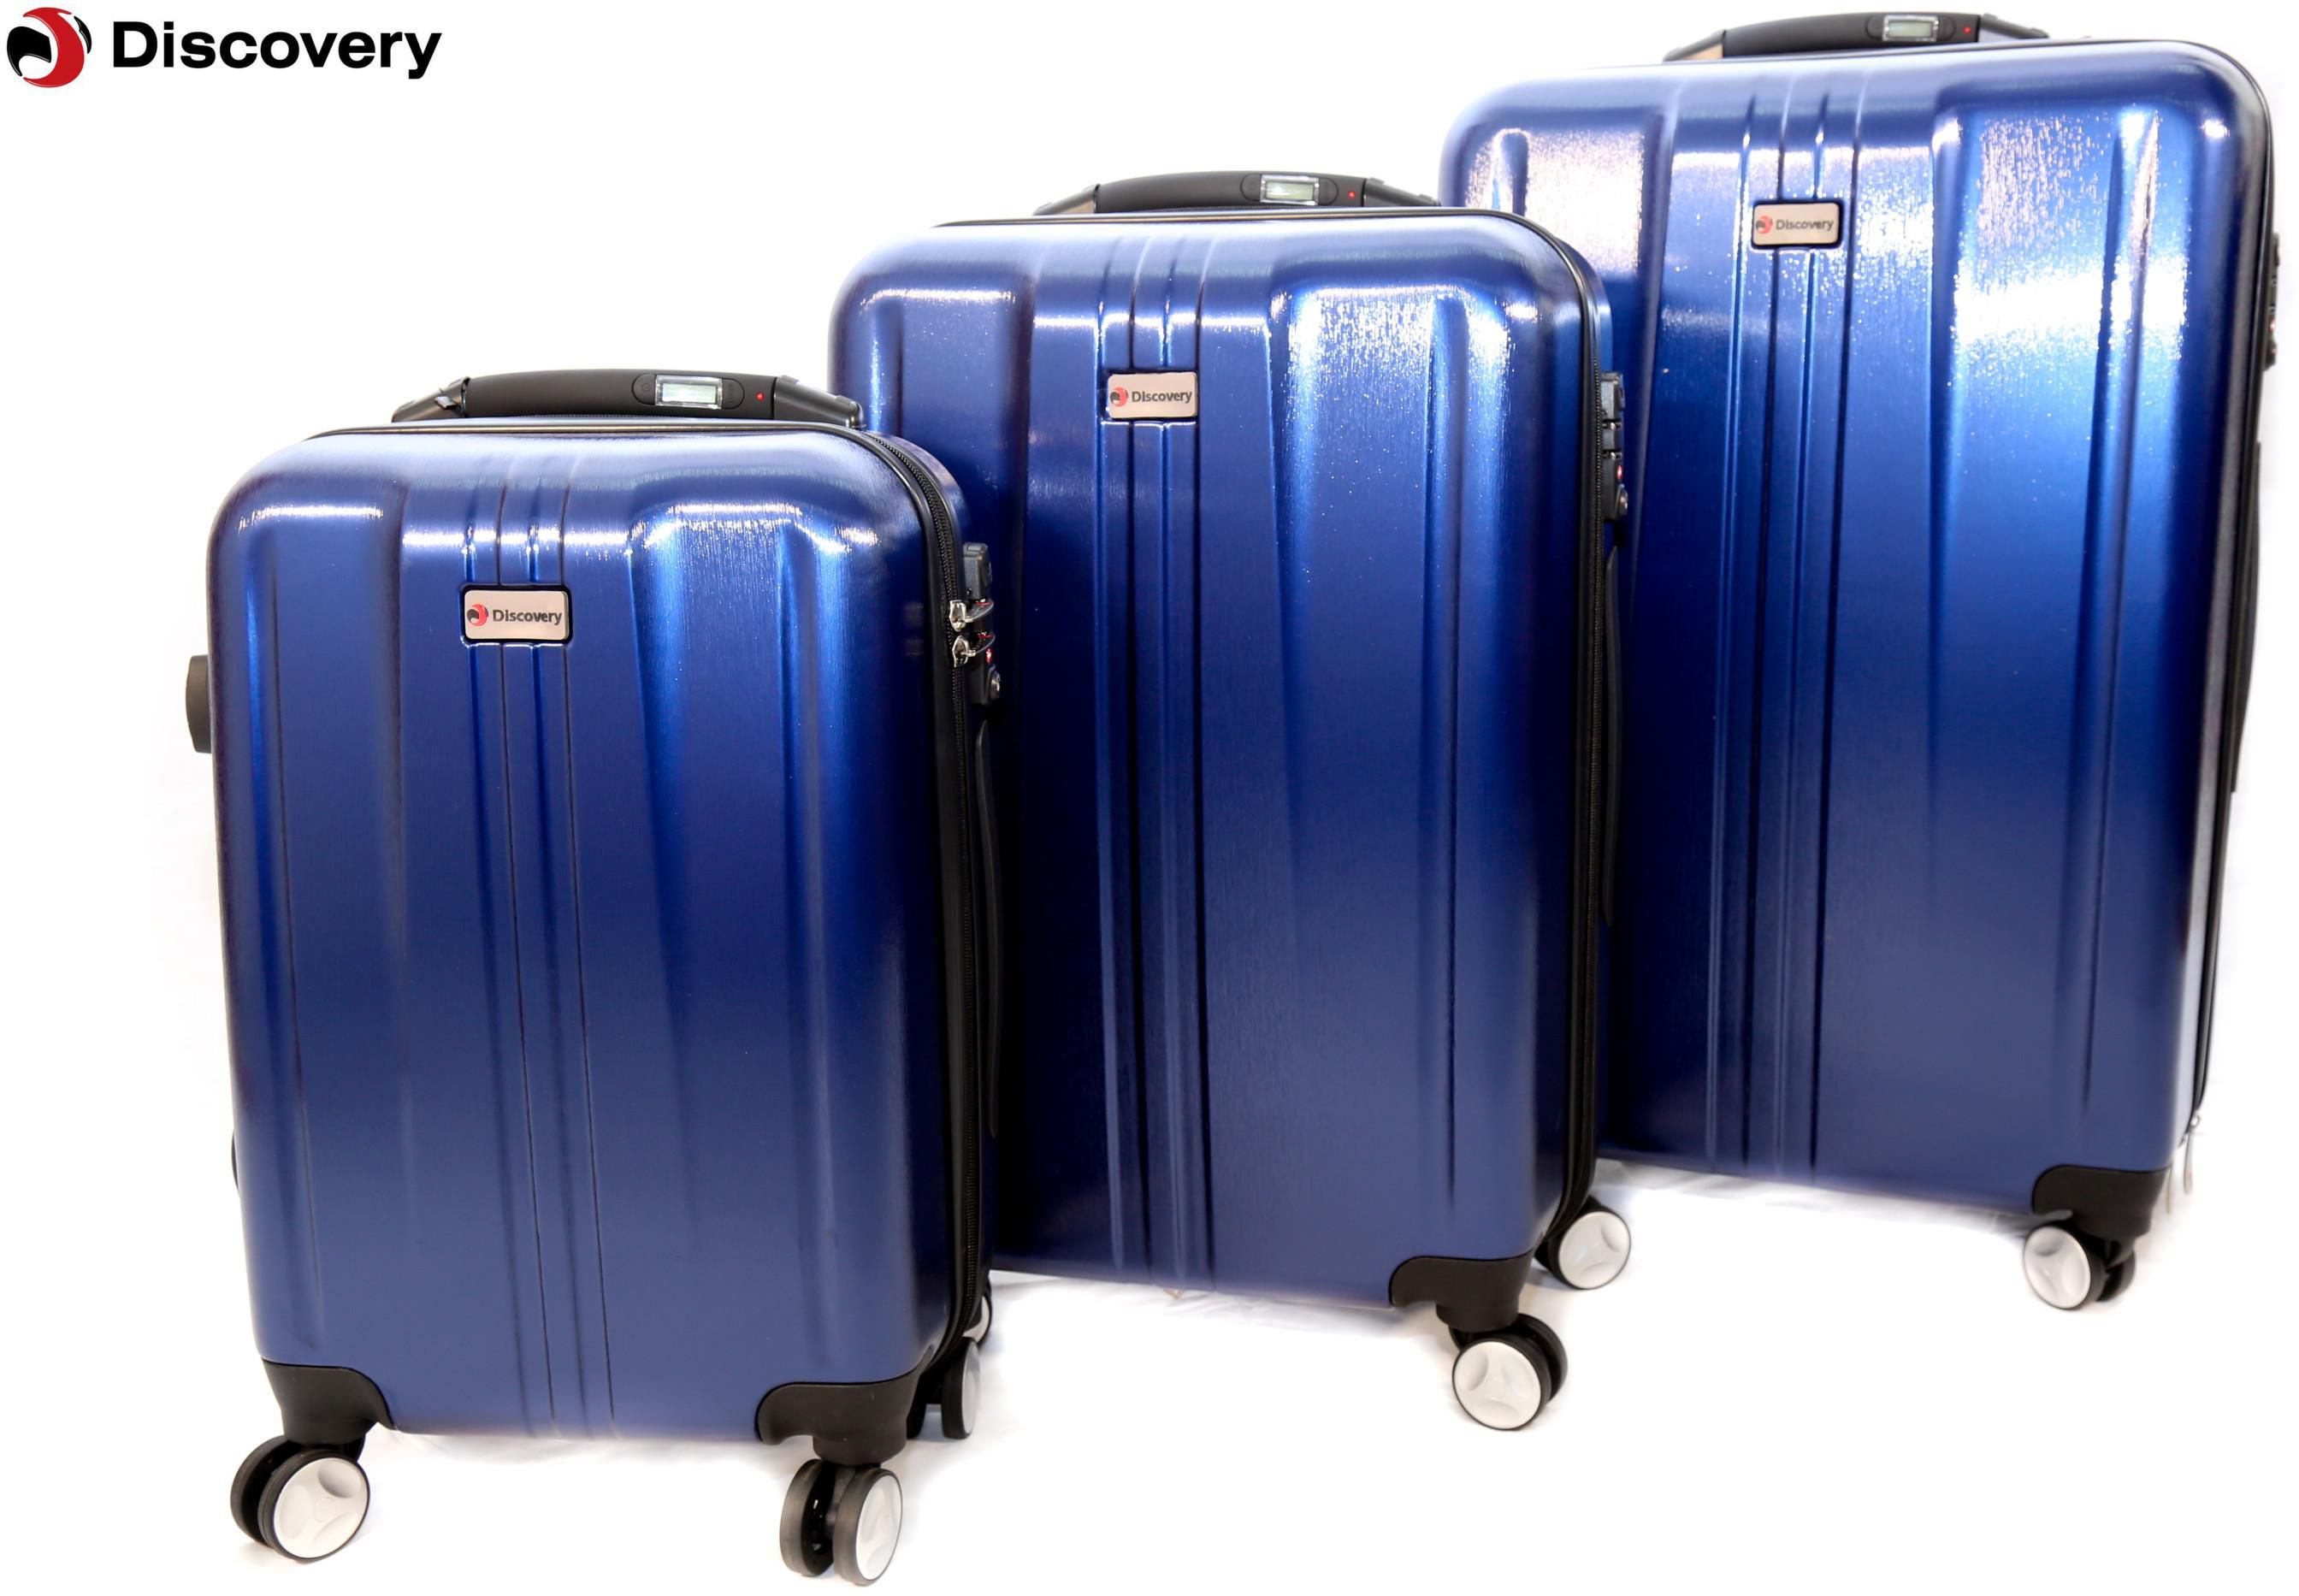 Discovery Smart Luggage 3 Piece Set Blue